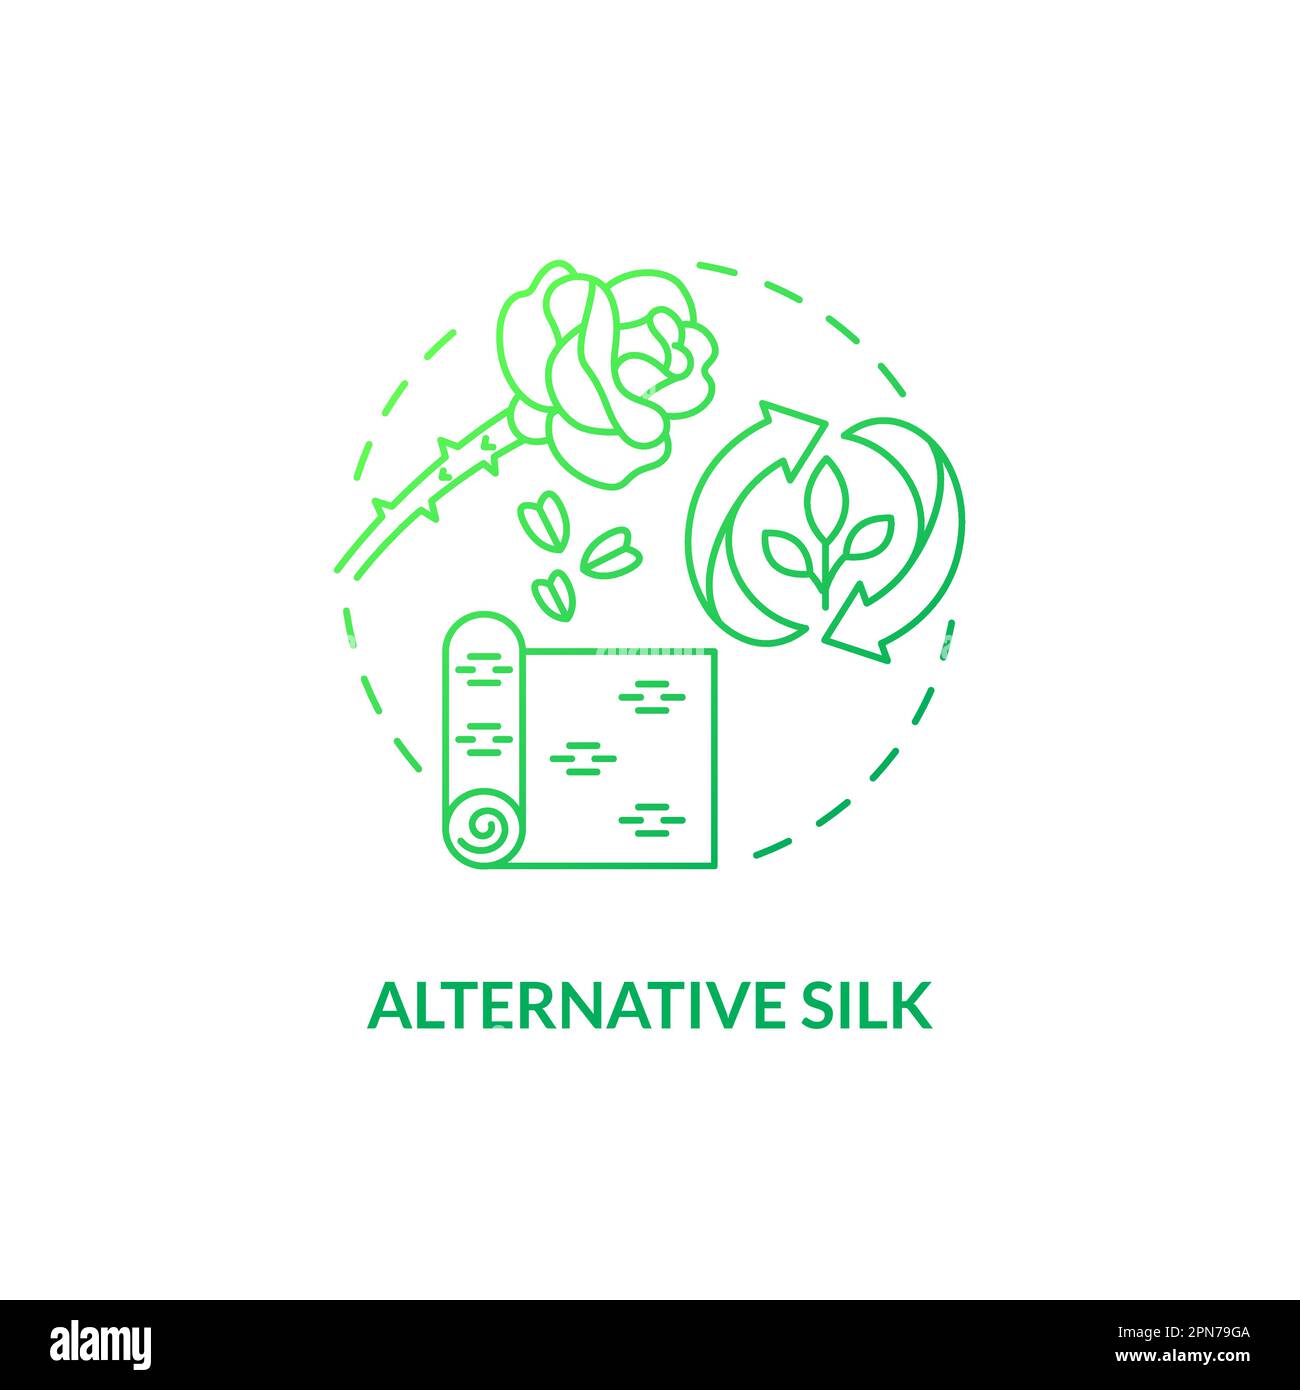 Alternative silk green gradient concept icon Stock Vector